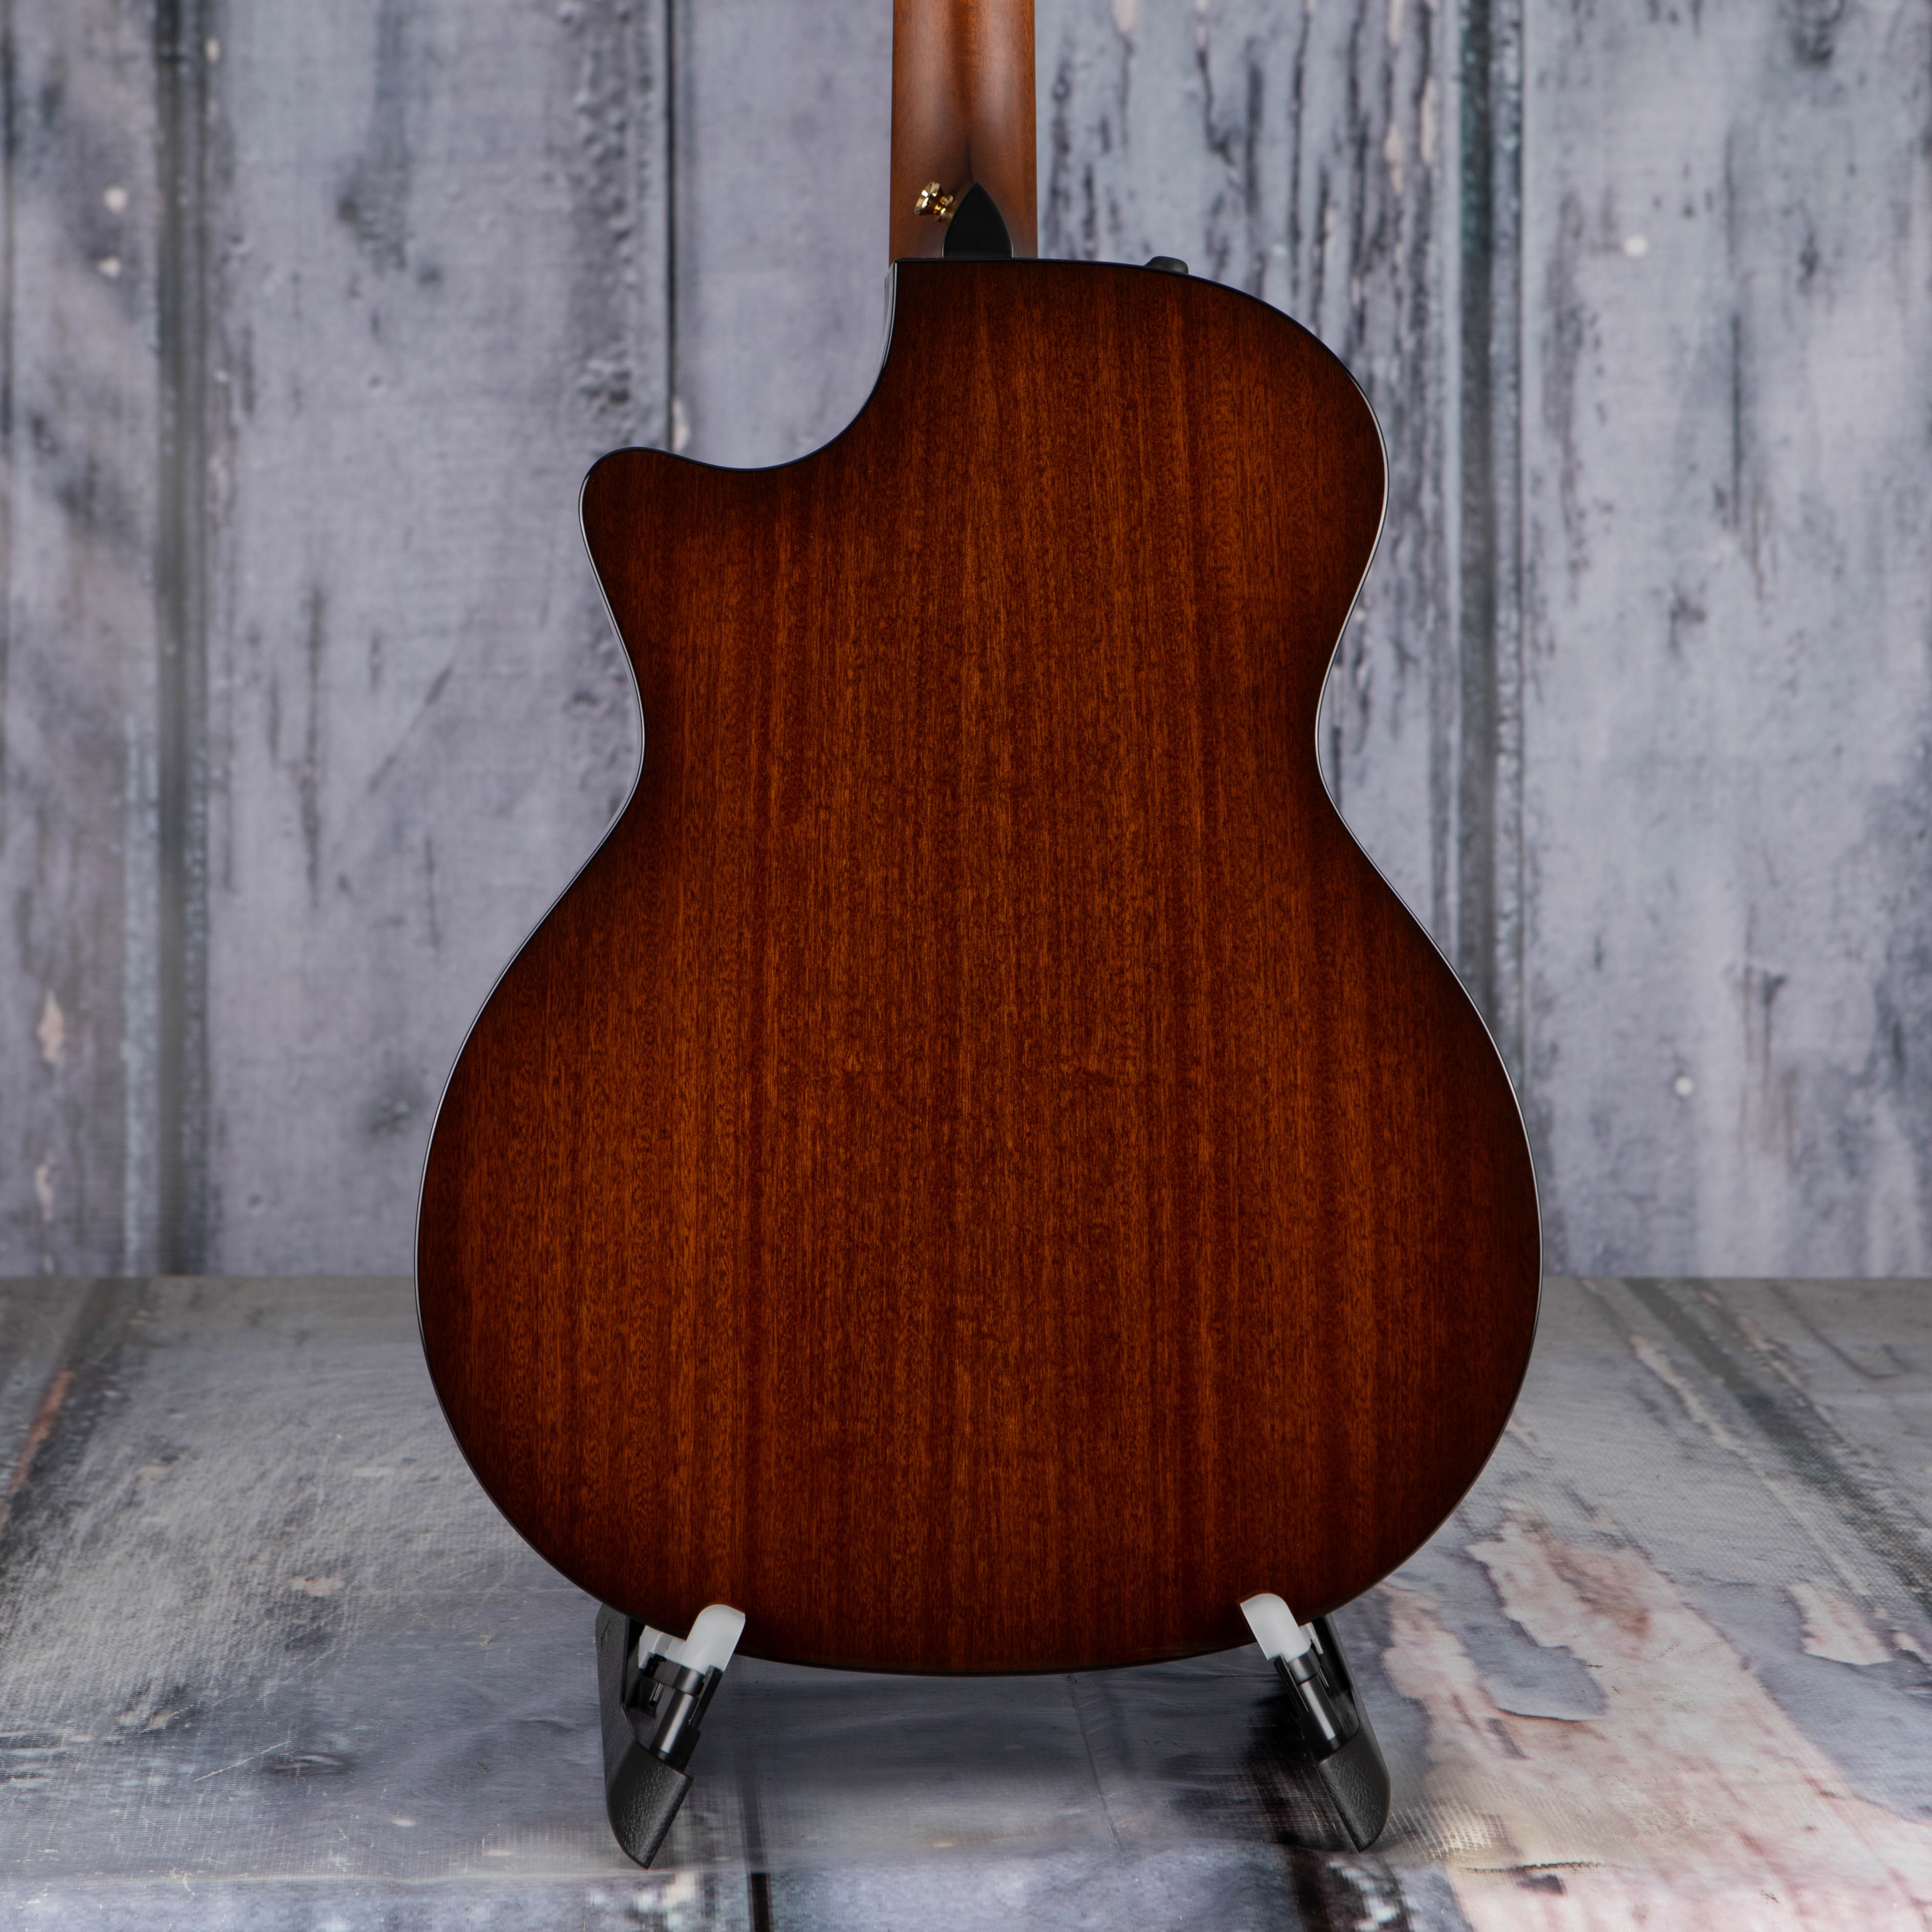 Taylor 50th Anniversary 314ce LTD Acoustic/Electric Guitar, Shaded Edgeburst, back closeup